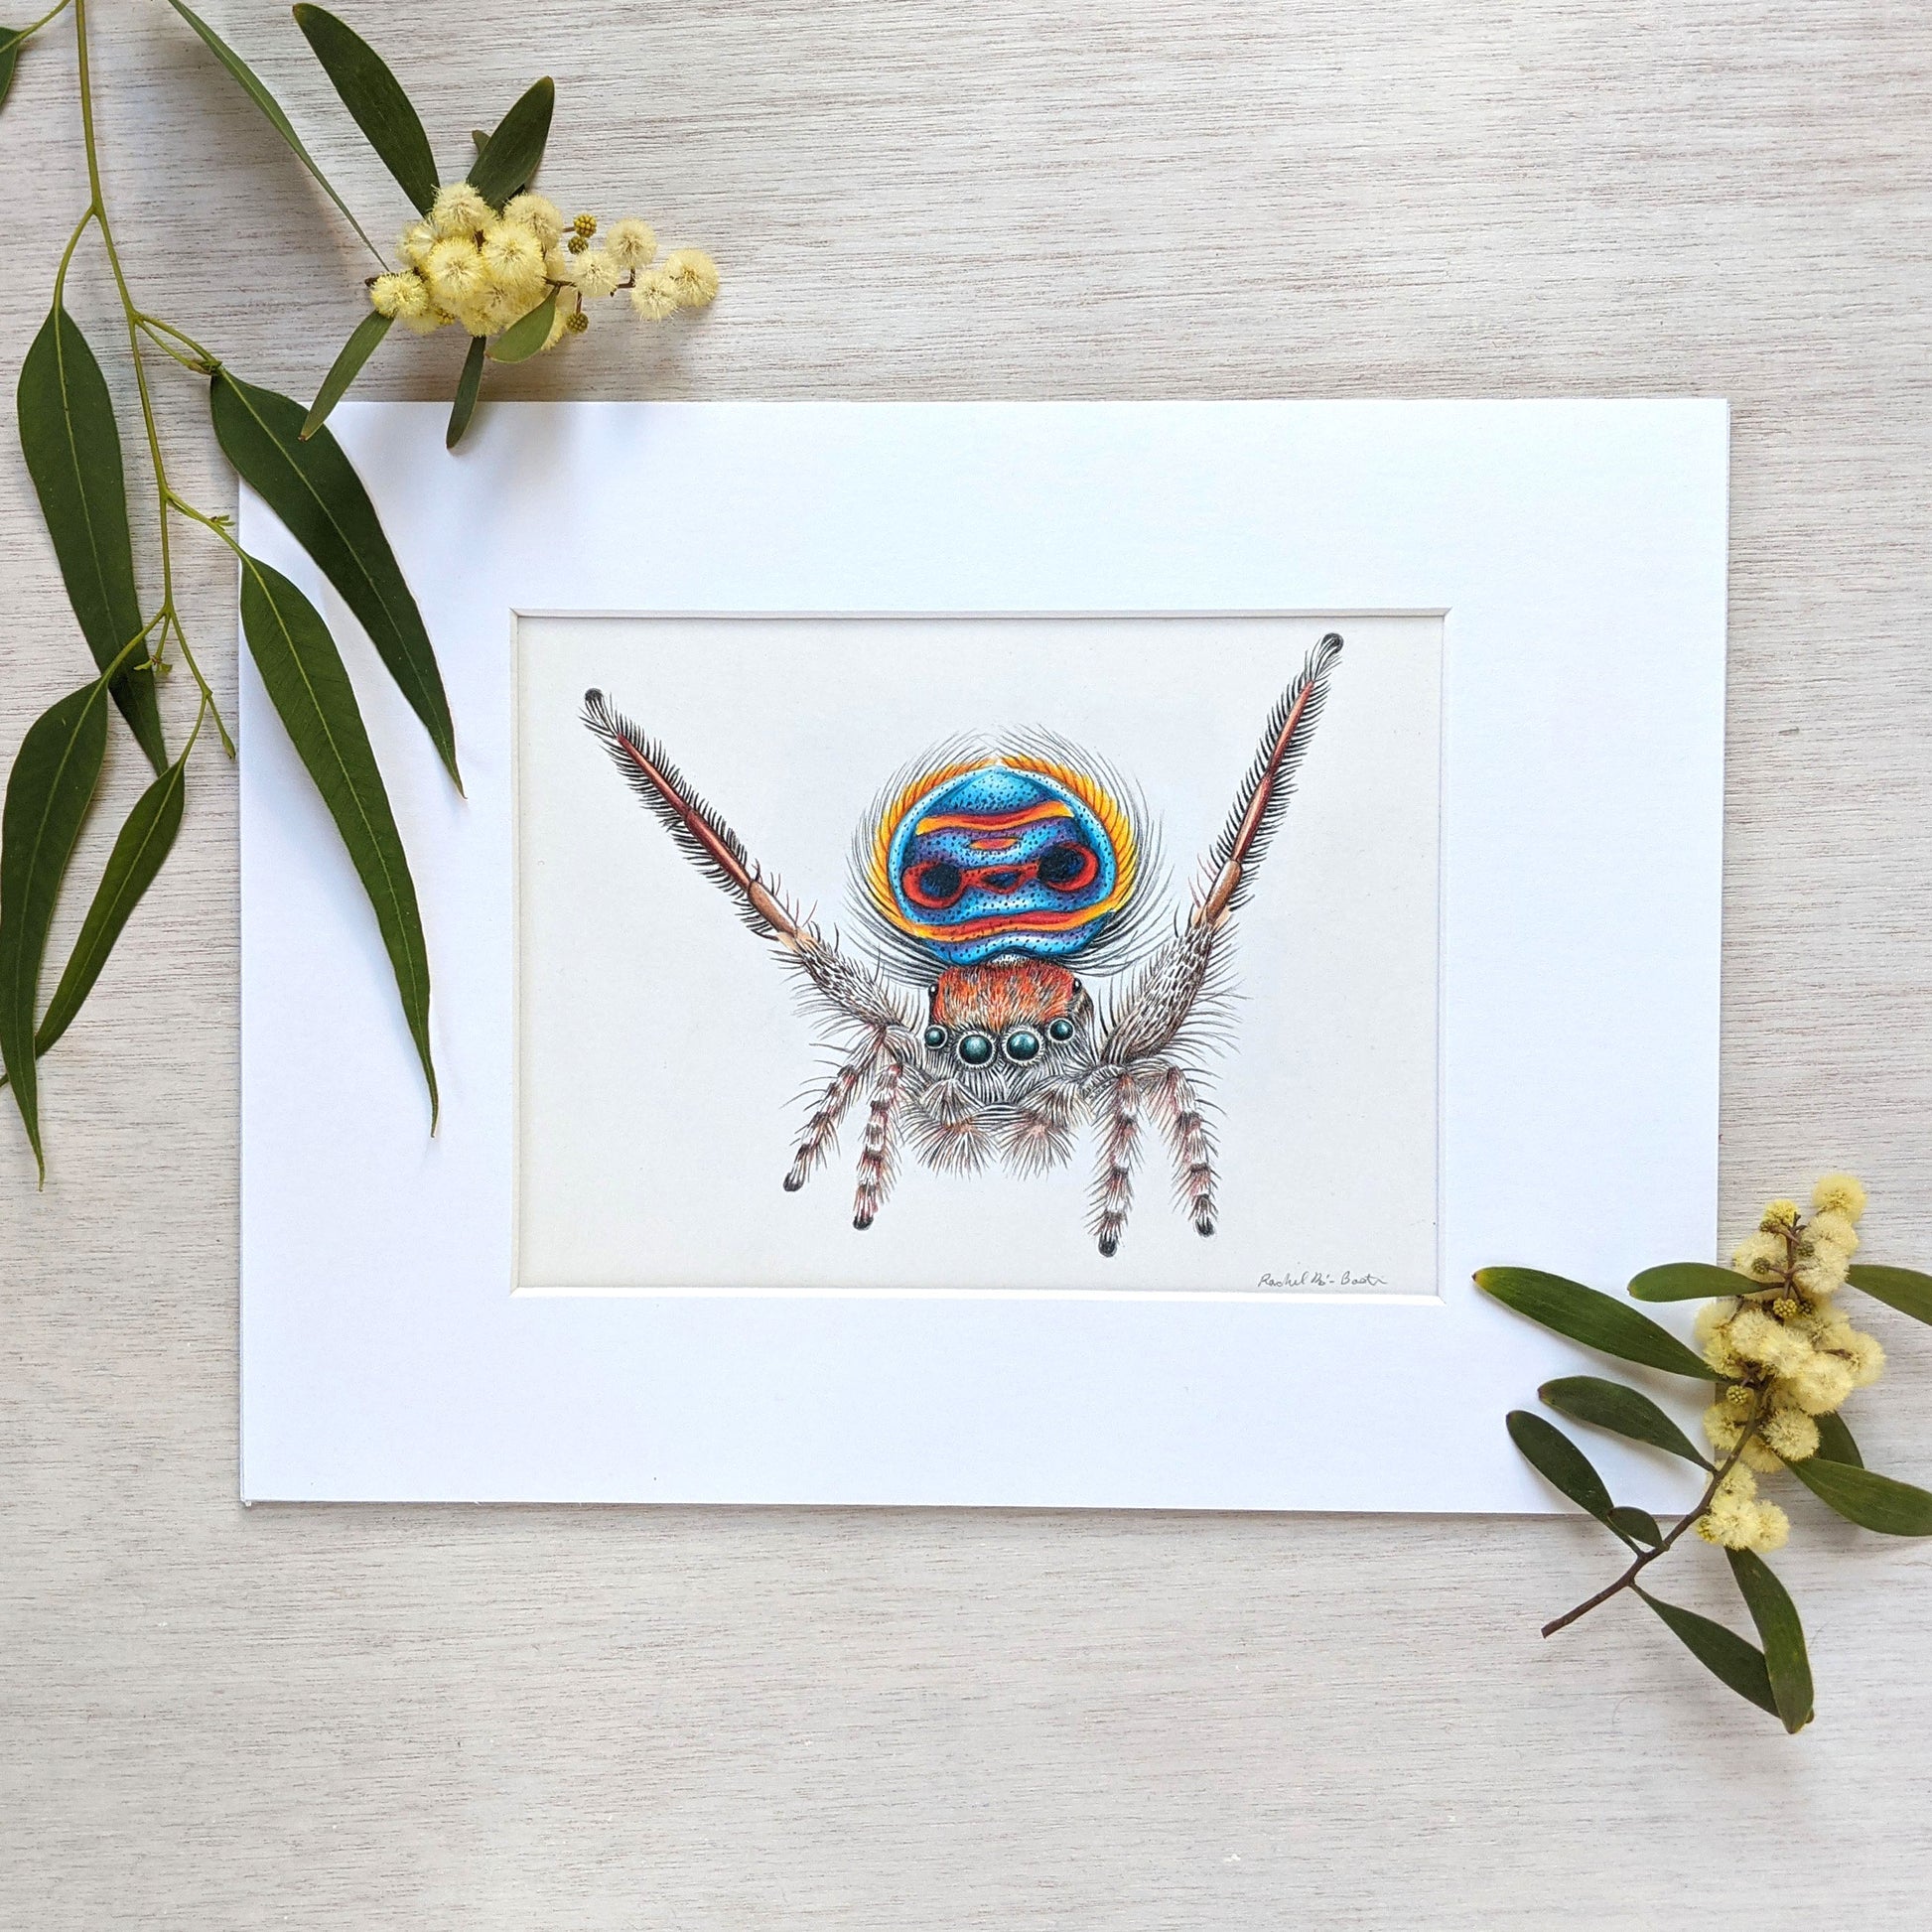 Original hand drawn pencil art of a coastal peacock spider by Rachel Diaz-Bastin. Original artwork available